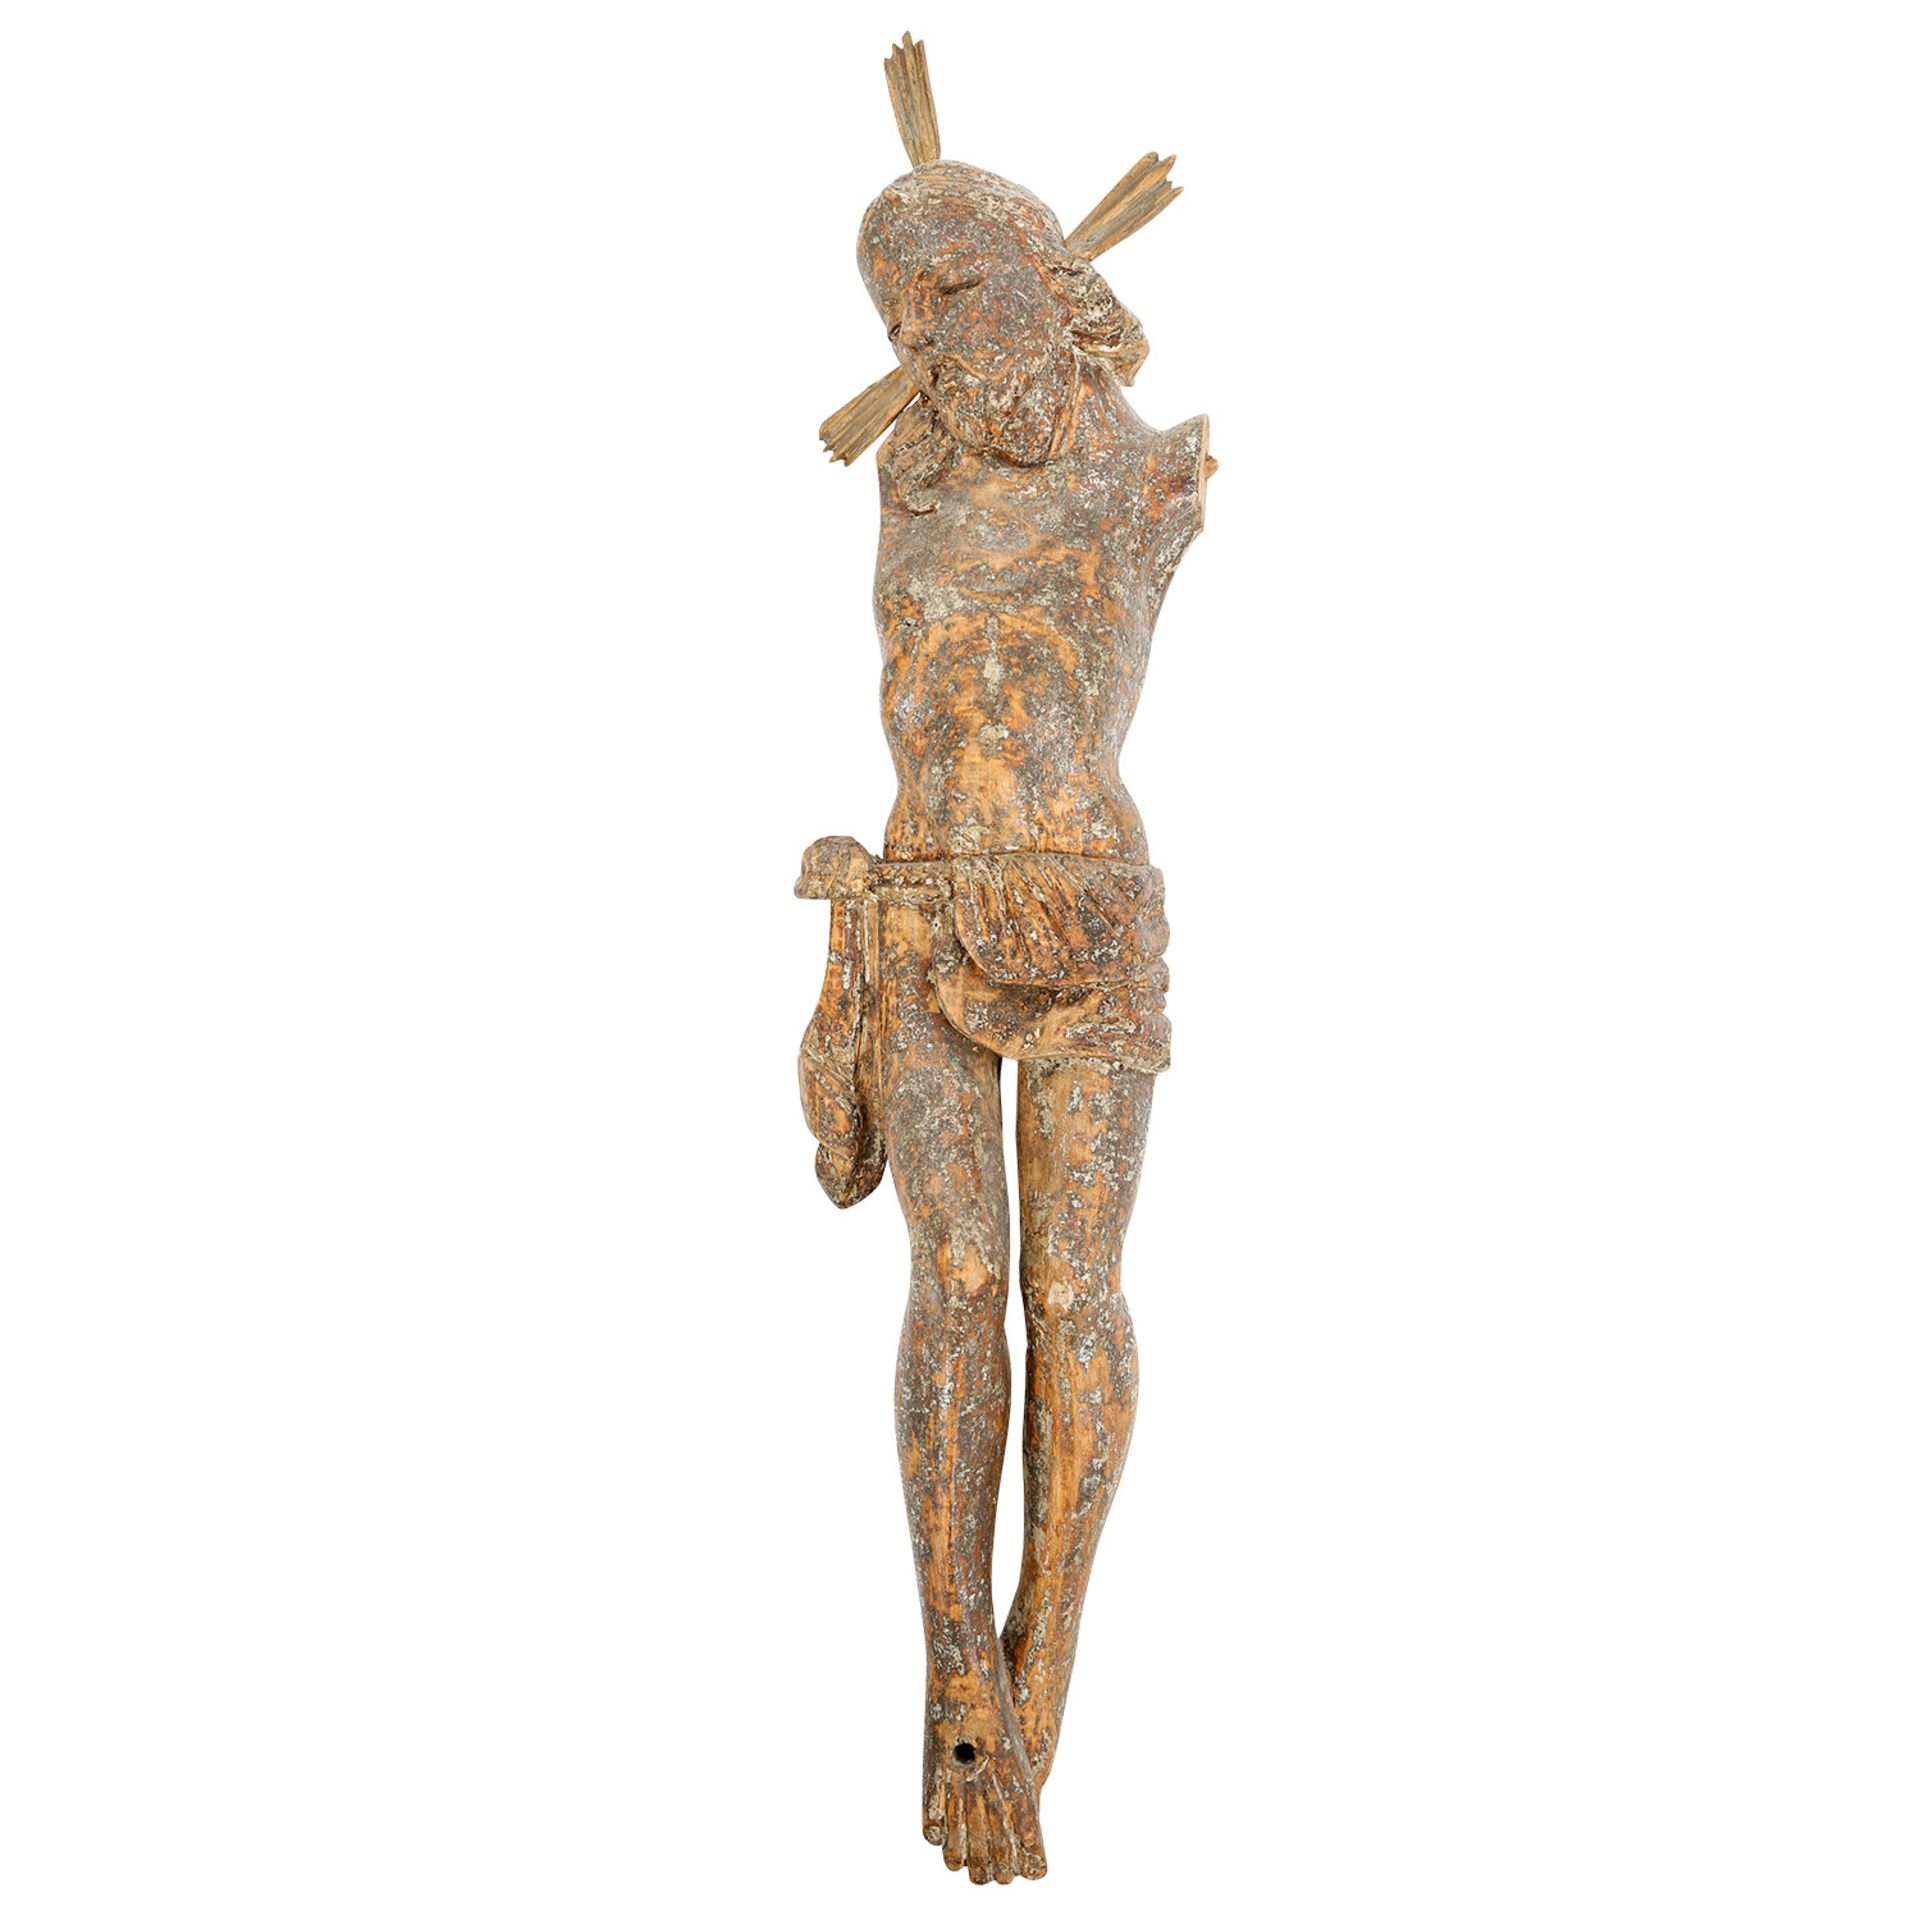 CHRISTUS-CORPUS Spätmittelalter, Holz beschnitzt, Fragment eines Altarkurzifix, gestreckter